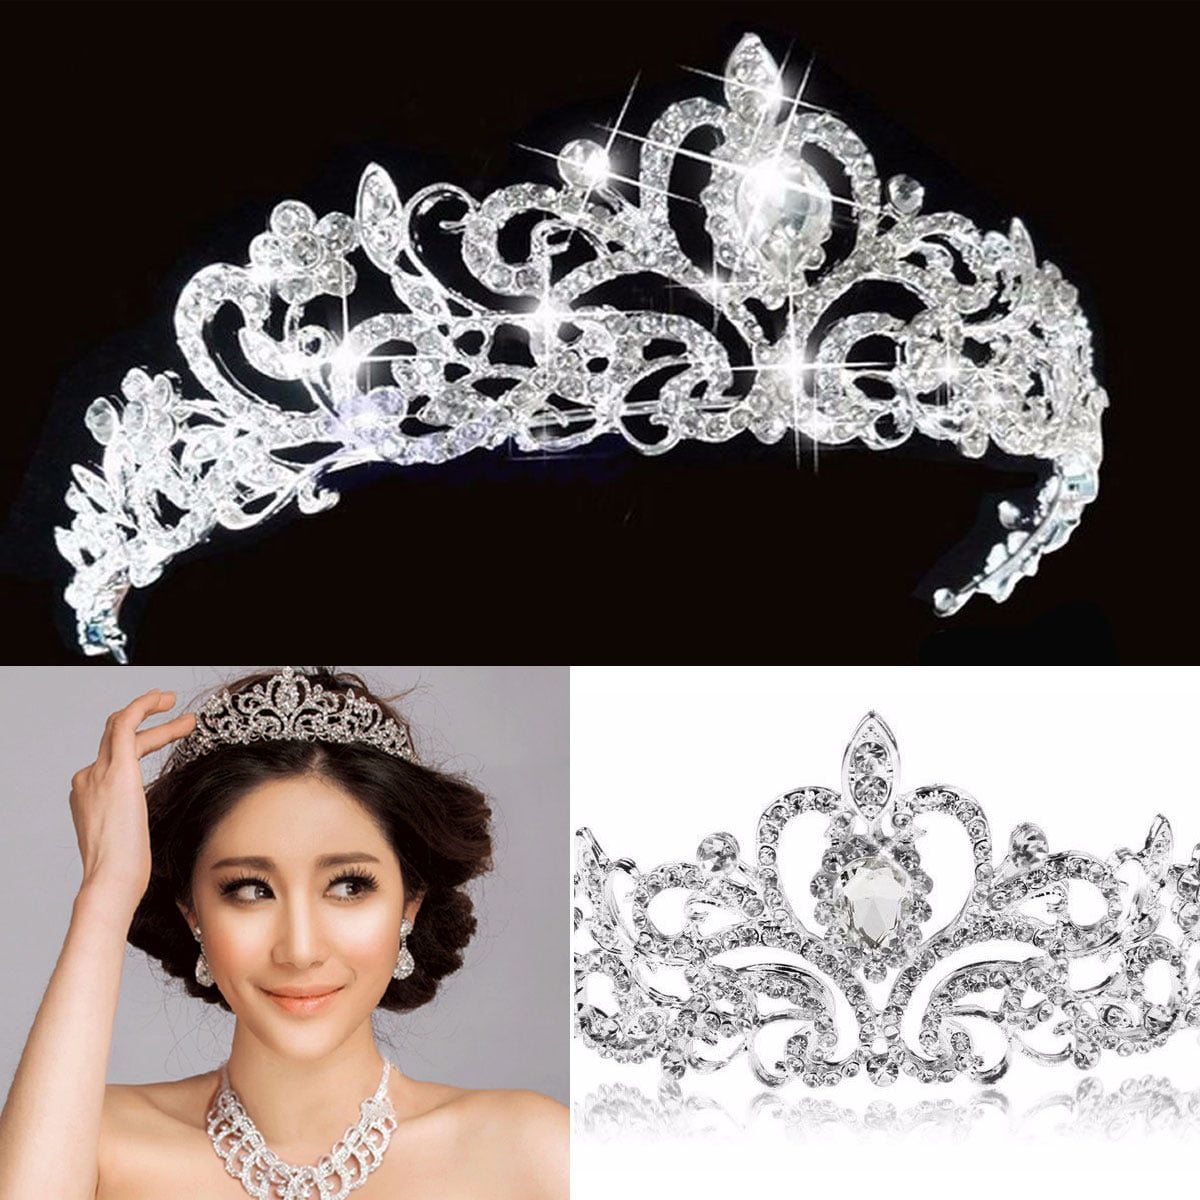 New Stunning Wedding Bridal Princess Crystal Prom Hair Tiara Crown Veil Headband 